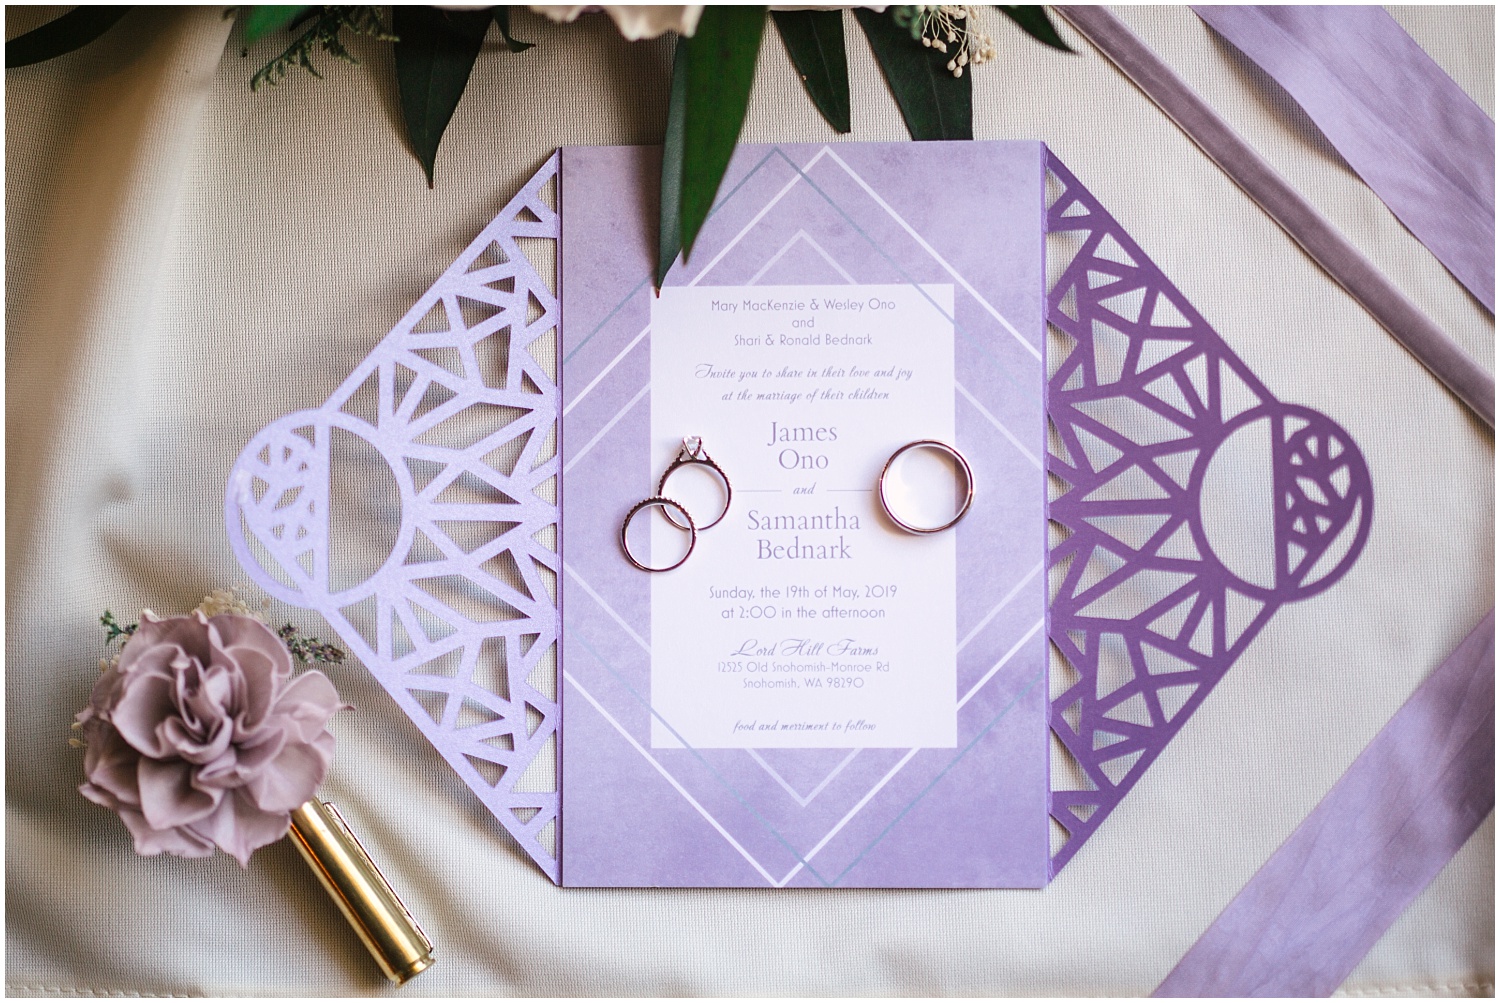 DIY purple geometric shape themed invitations to Lord Hill Farms wedding